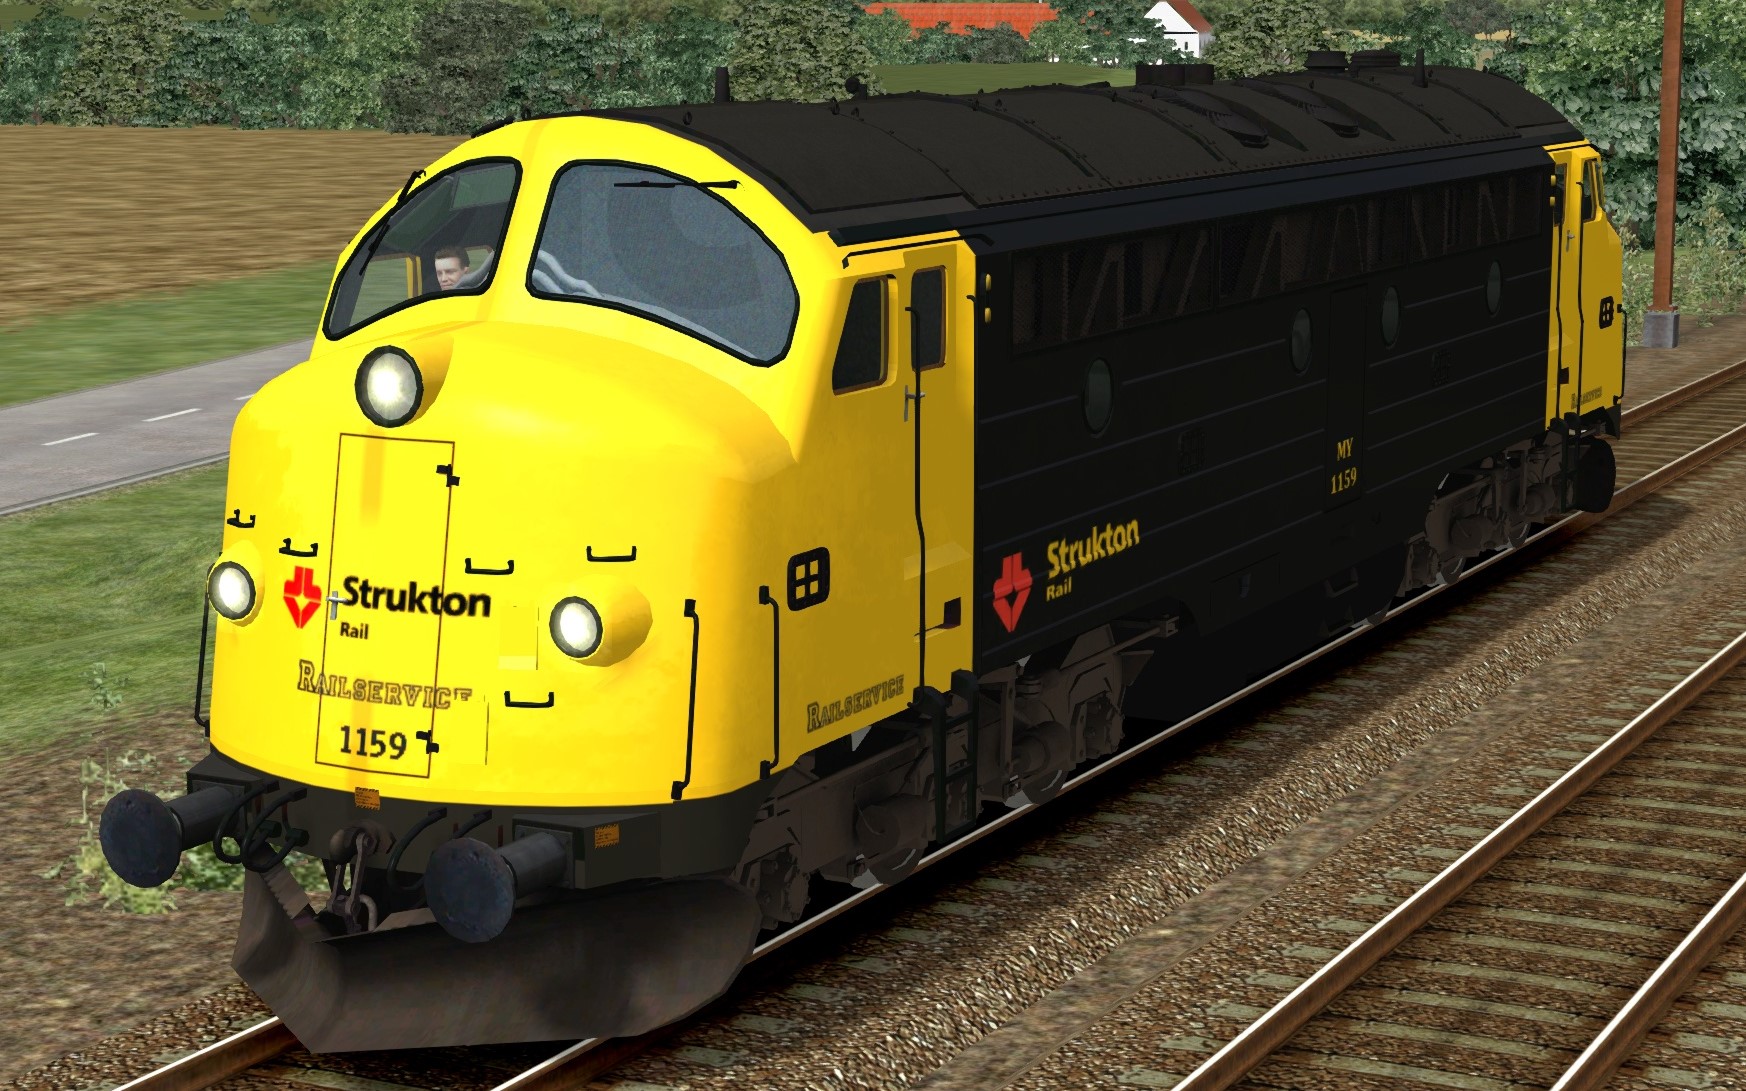 MY 1159 Strukton Rail